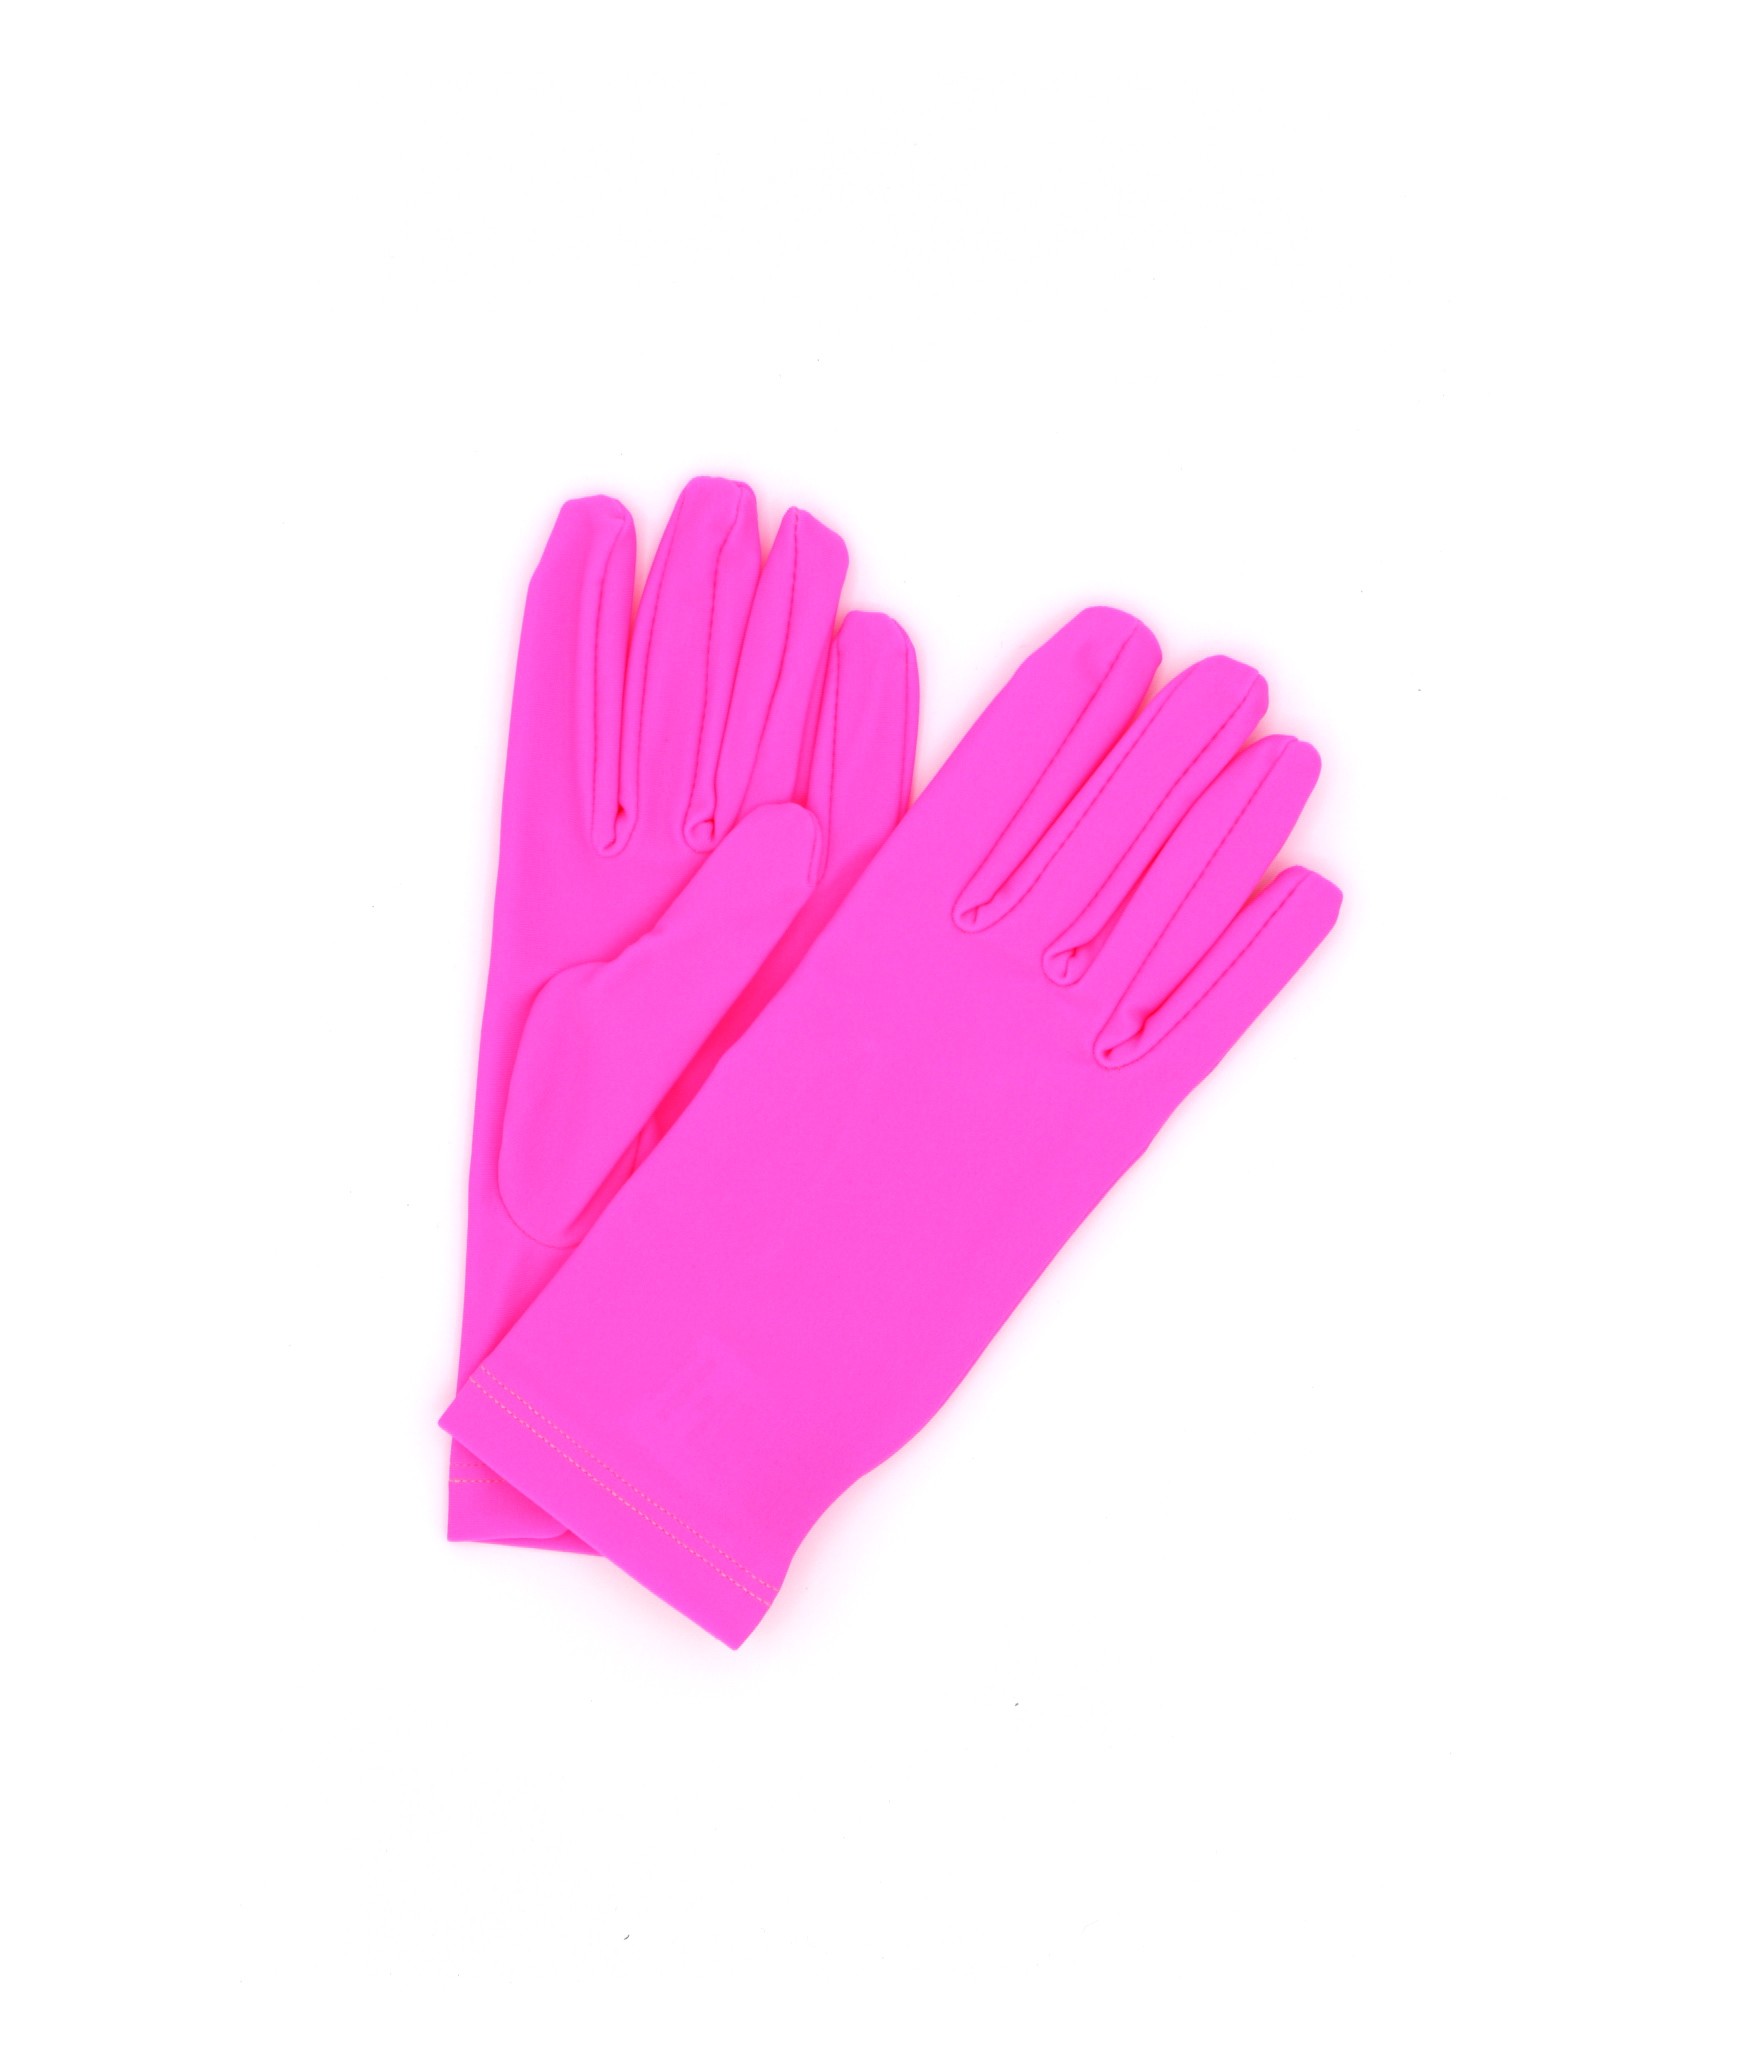 Damen Textil Glove Lycra Pink Sermoneta Gloves 